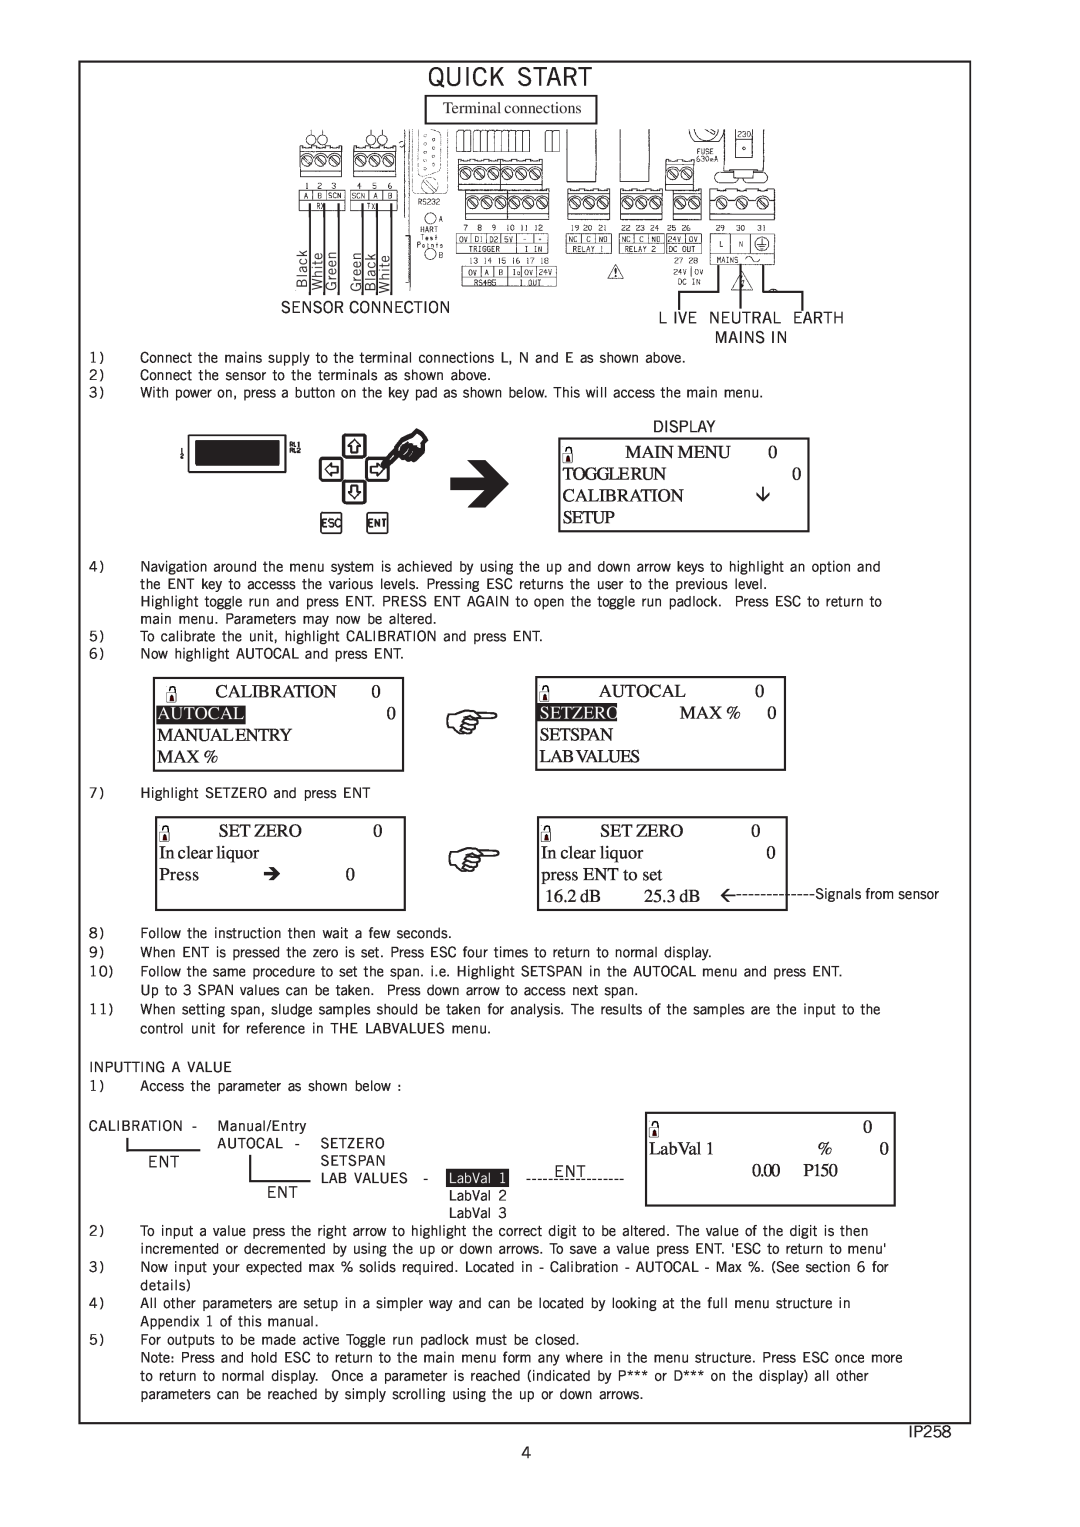 Emerson IP258 manual Quick Start, AUTOCAL0 MANUALENTRY, Setzero Max % 